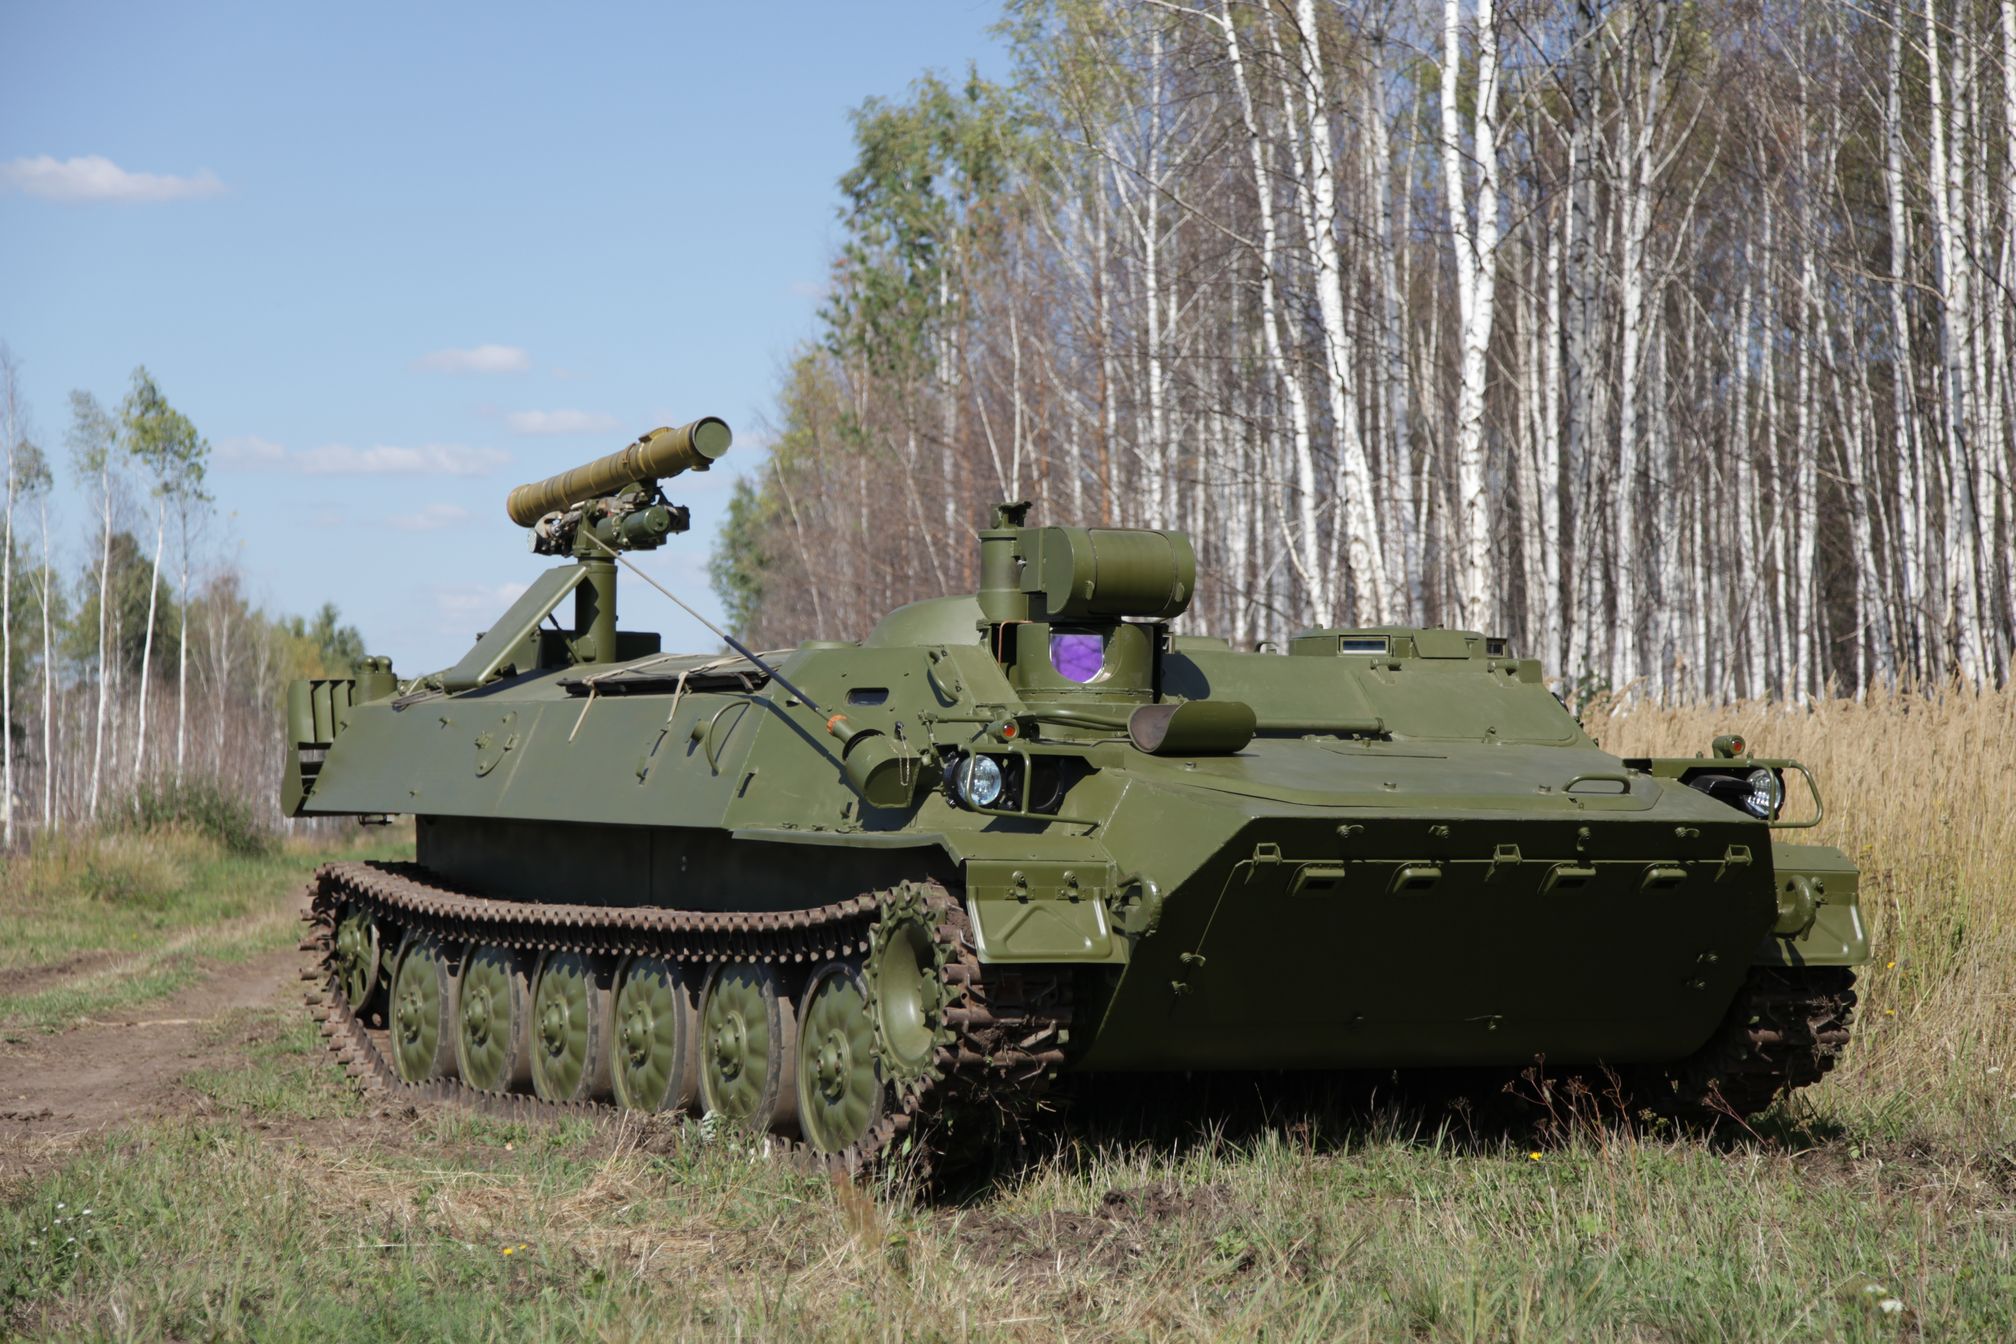 Shturm-SM self-propelled combat vehicles